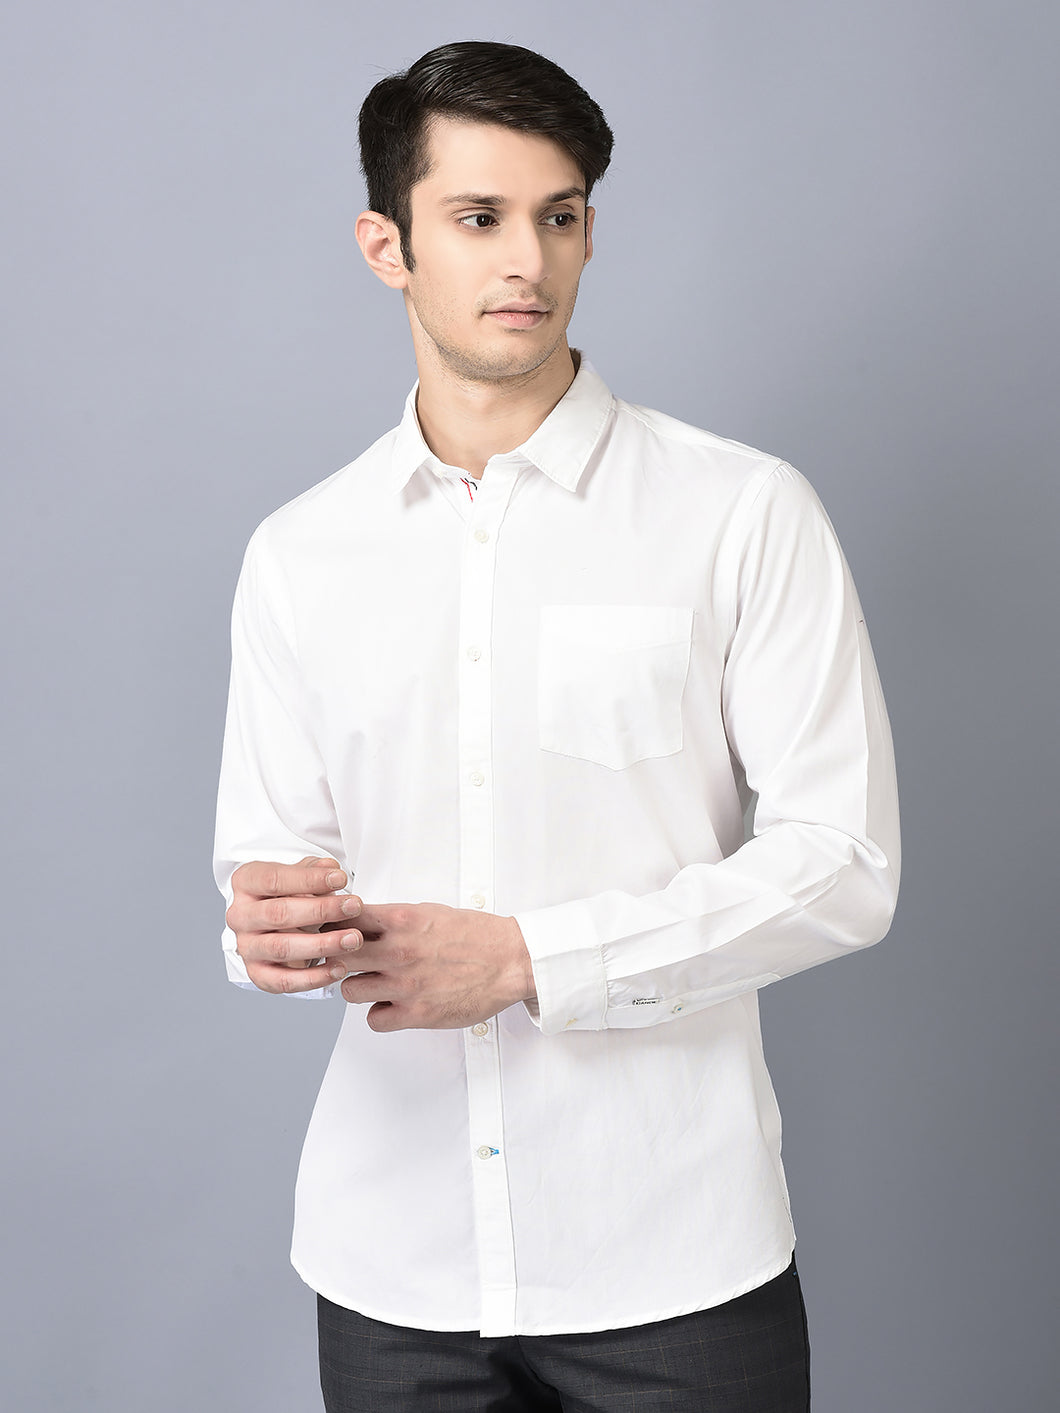 CANOE MEN Casual Shirt White Color Cotton Fabric Button Closure Solid